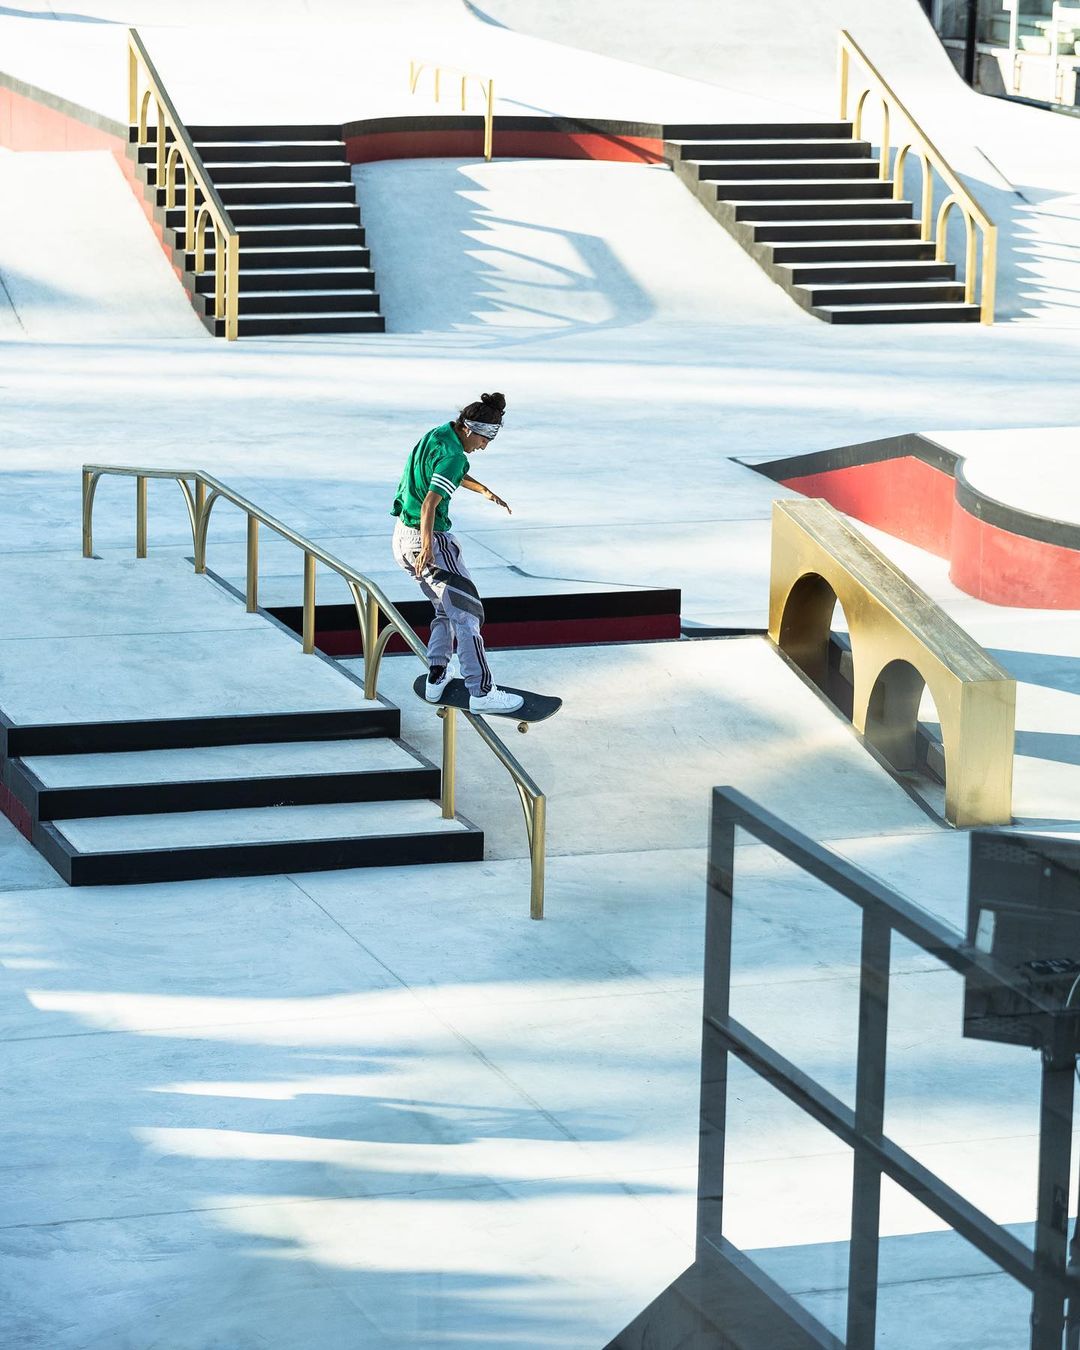 Top U.S. Women’s Street Skateboarder Mariah Duran Set for Olympics